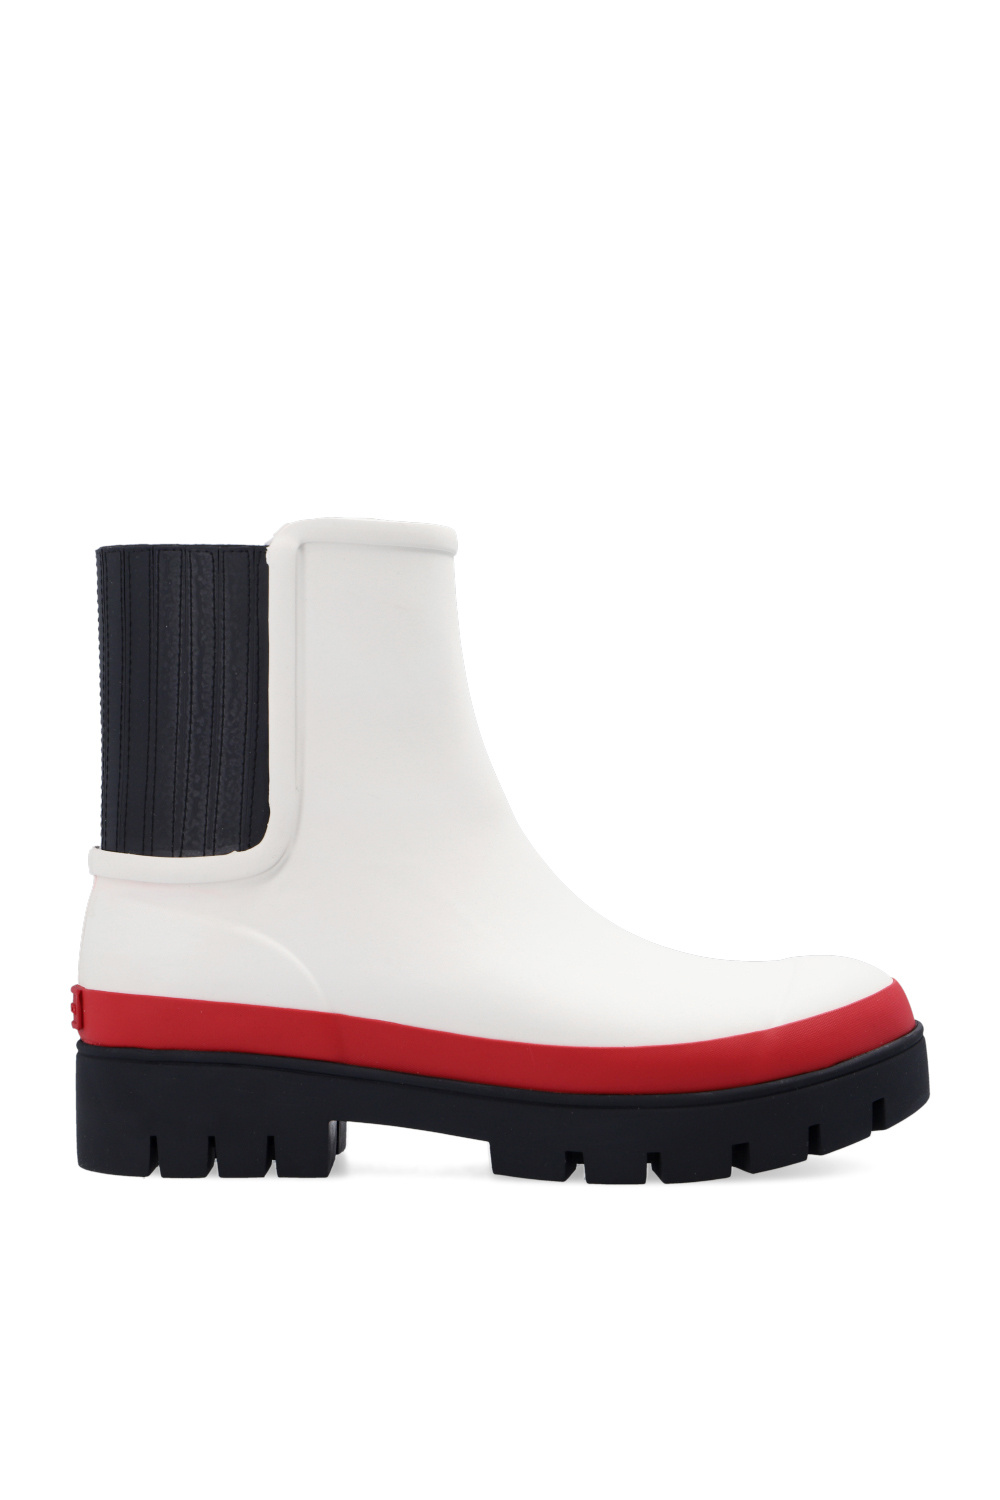 Cream Rain boots with logo Tory Burch - Vitkac TW